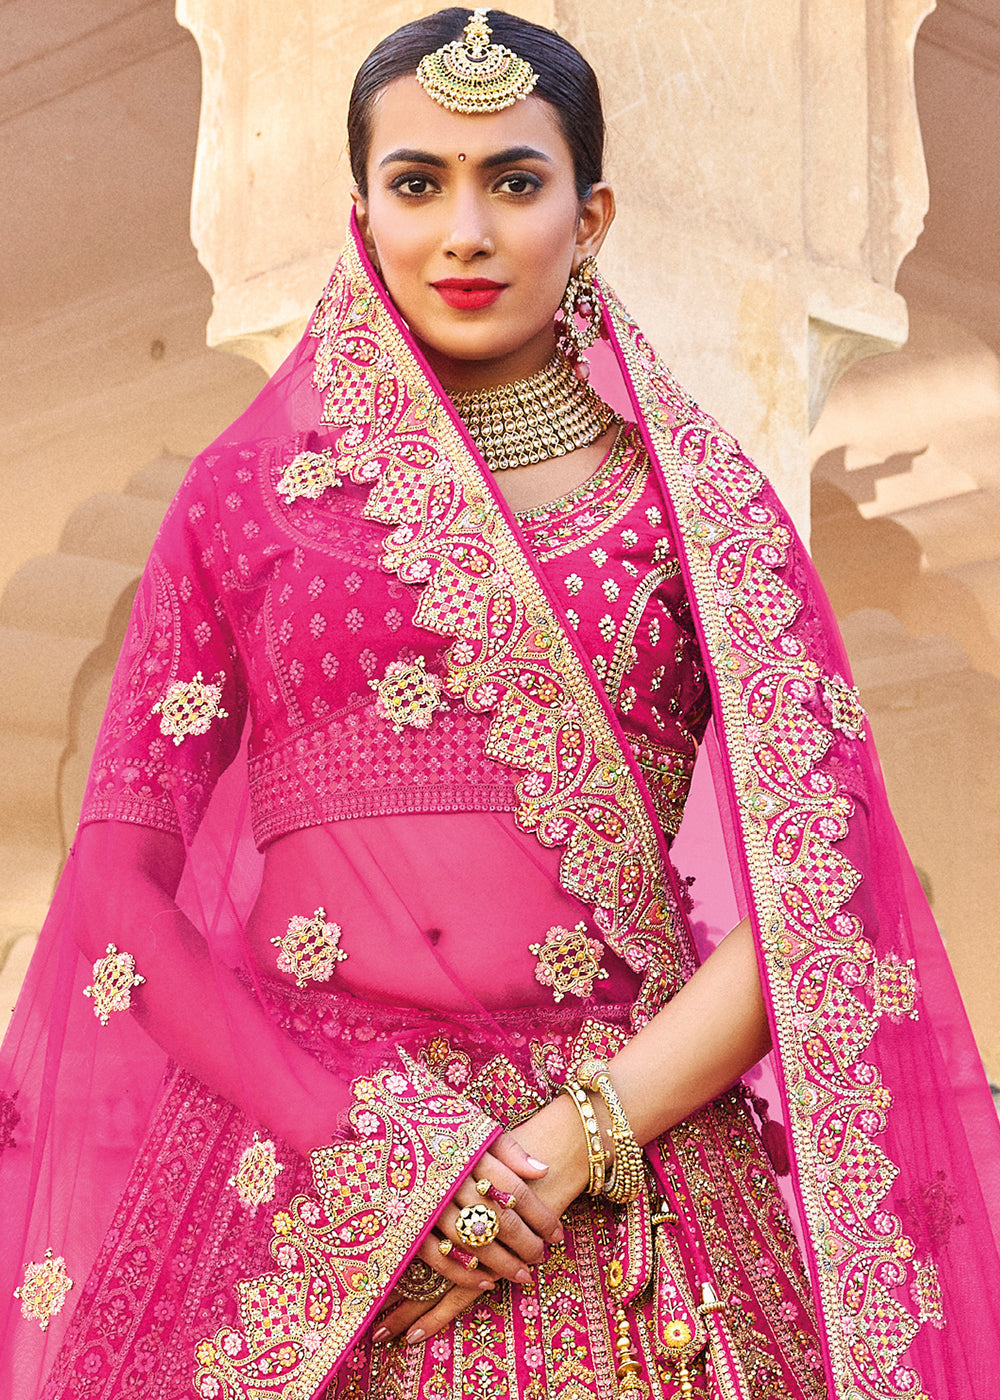 Hot Pink Banarasi Silk Lehenga Choli with Heavy Embroidery Work